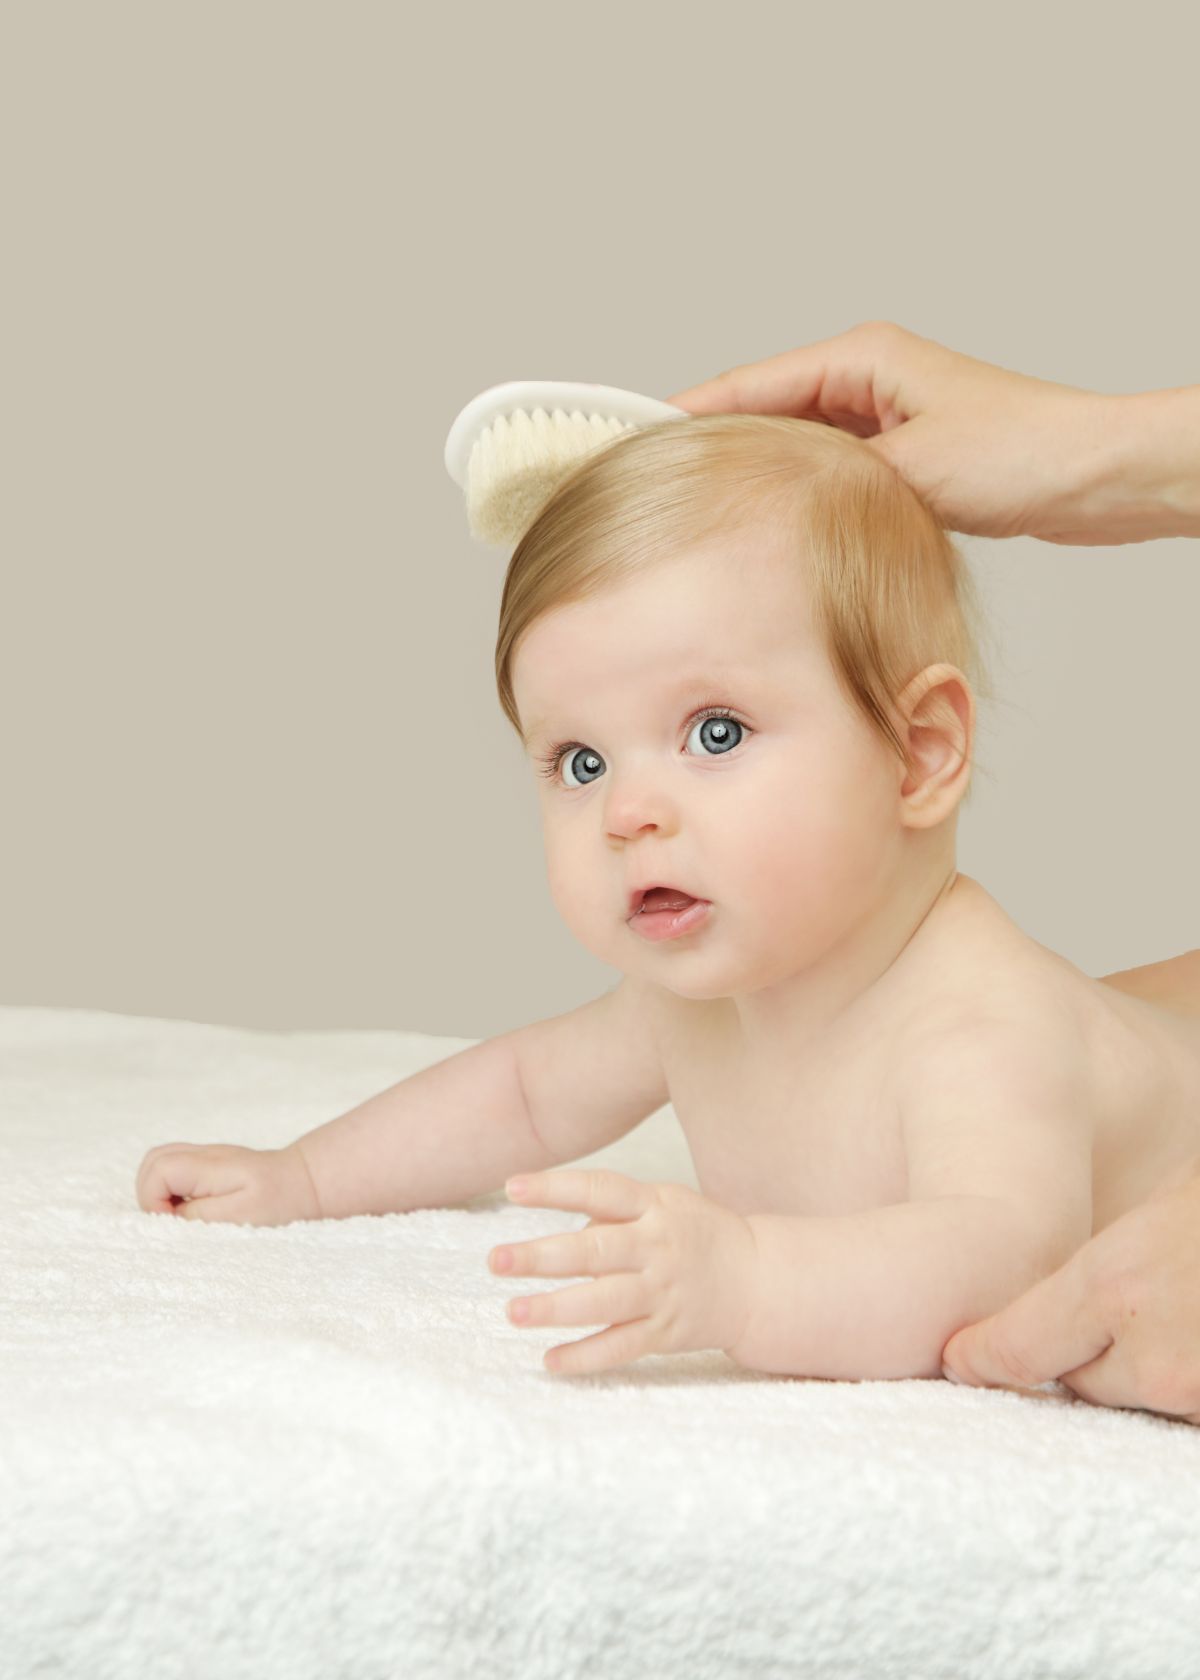 10 Best Baby Hair Brush Reviewed